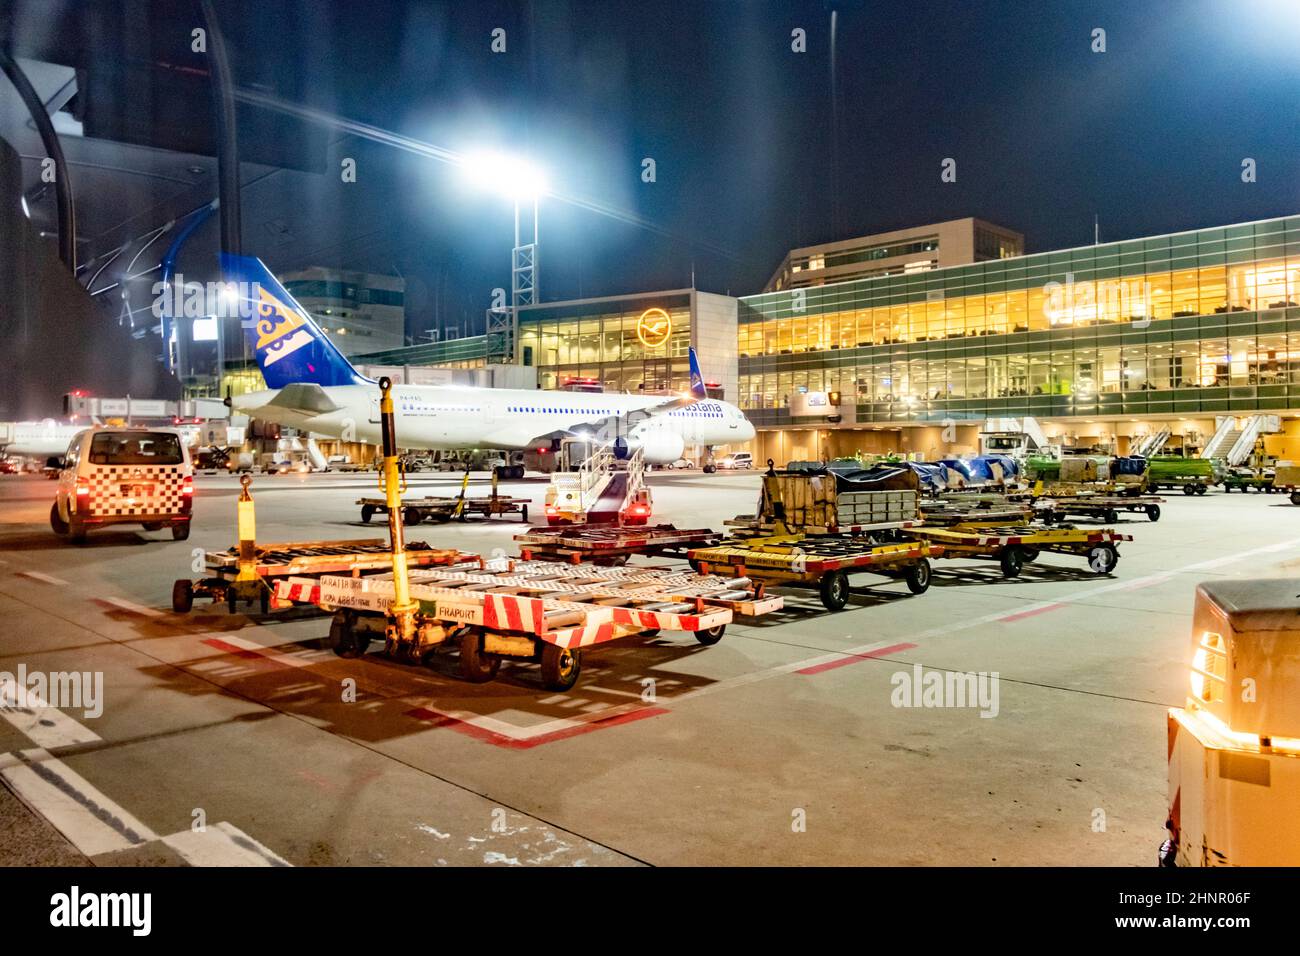 aircraft at the terminal at Frankfurt international airport in Germany Stock Photo